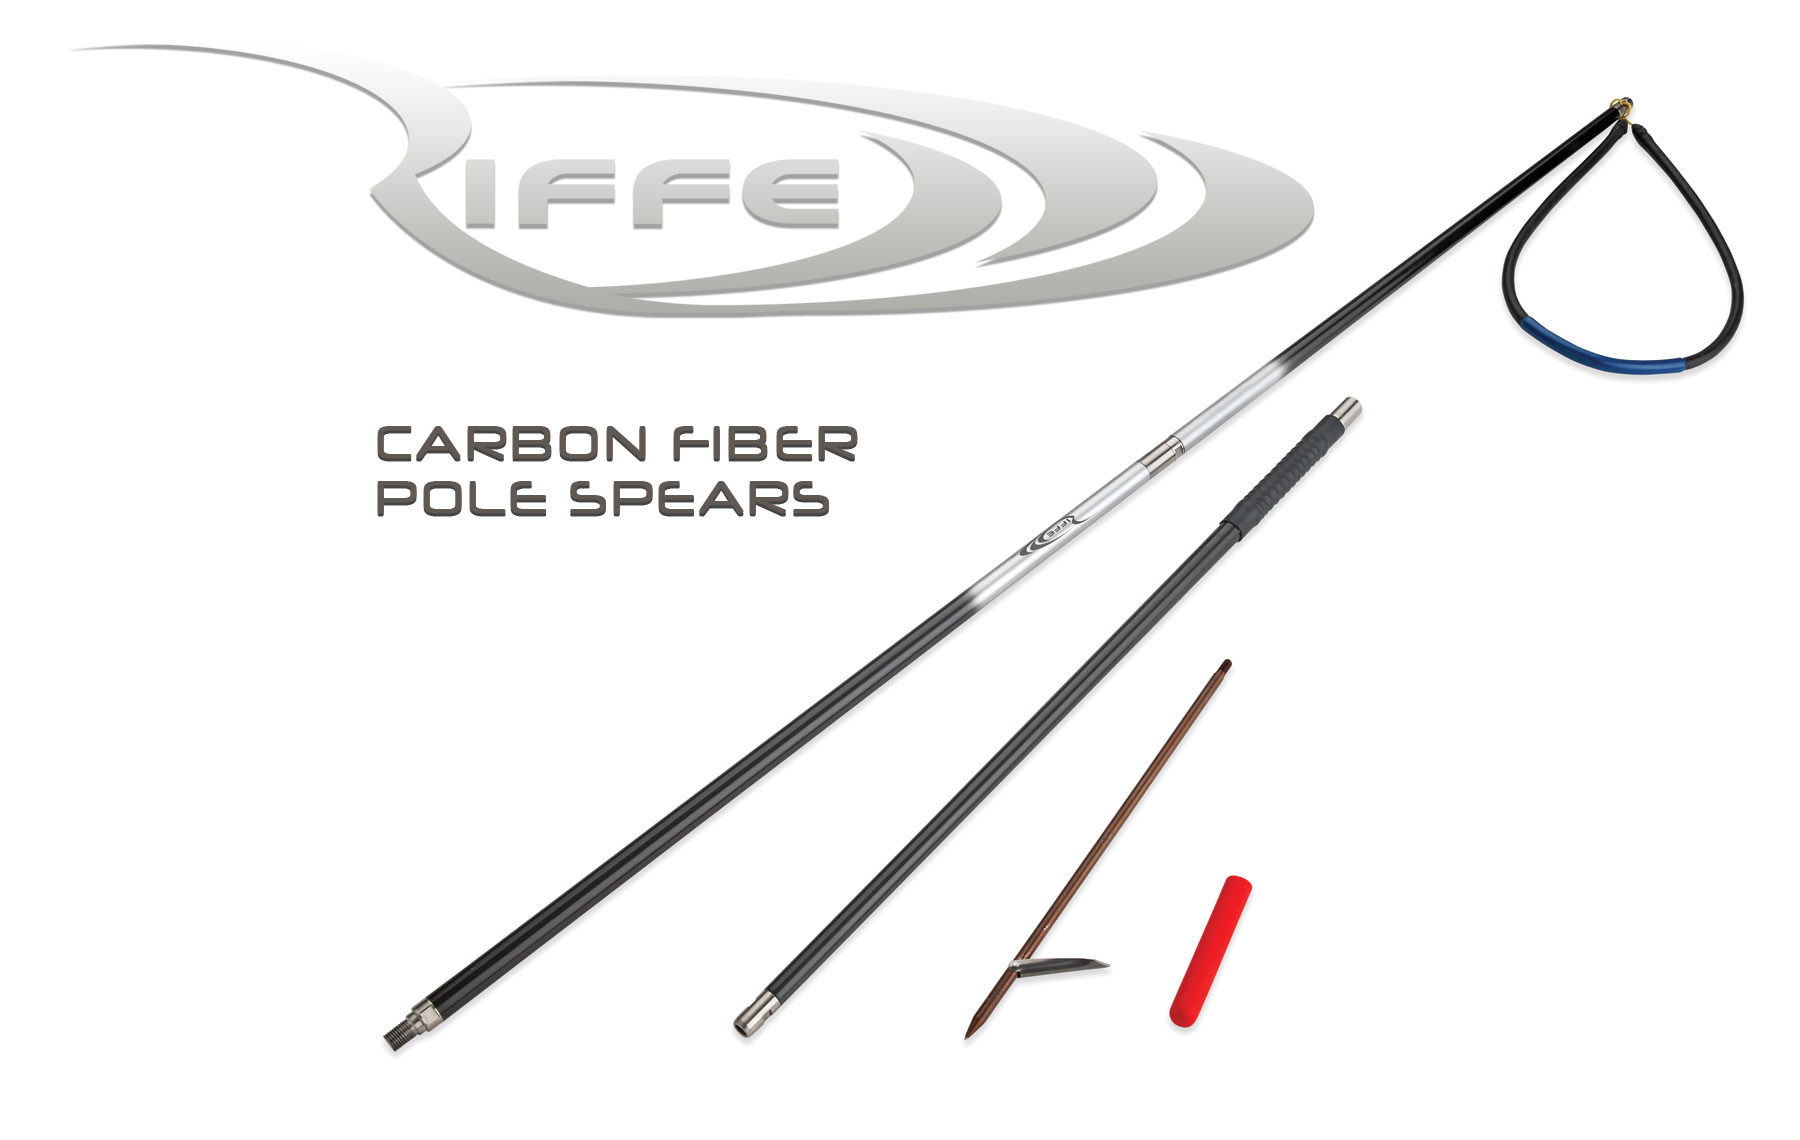 Riffe Carbon Fiber Pole Spear